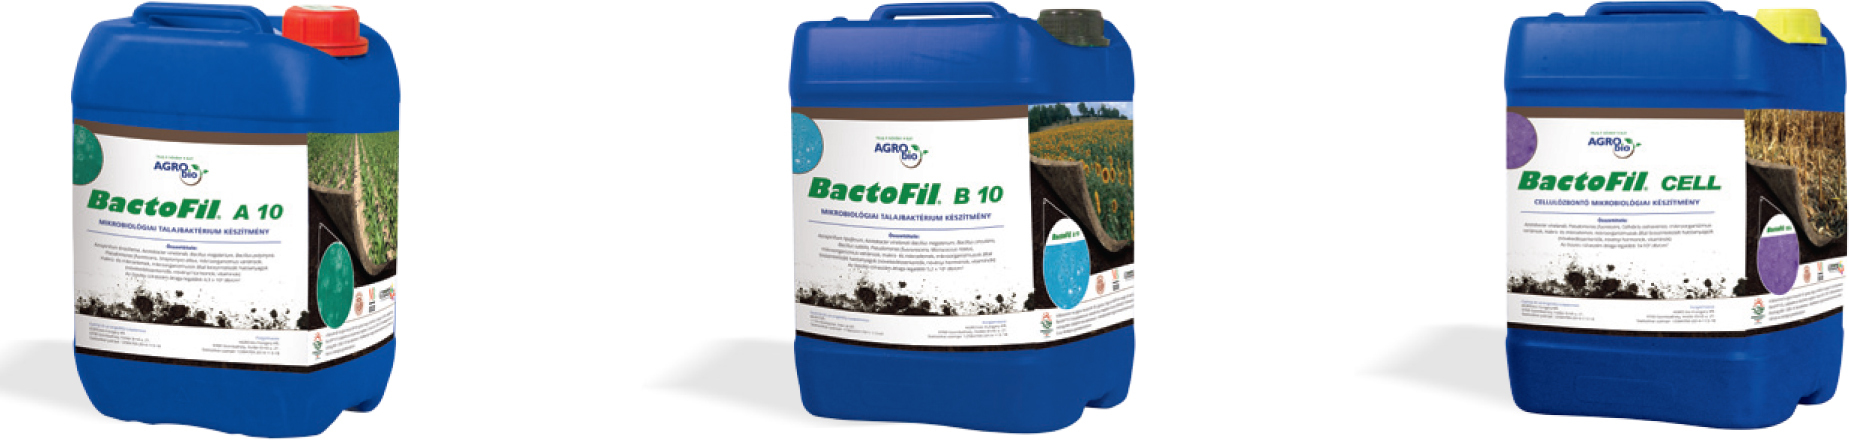 BactoFil® Cell, A10, B10